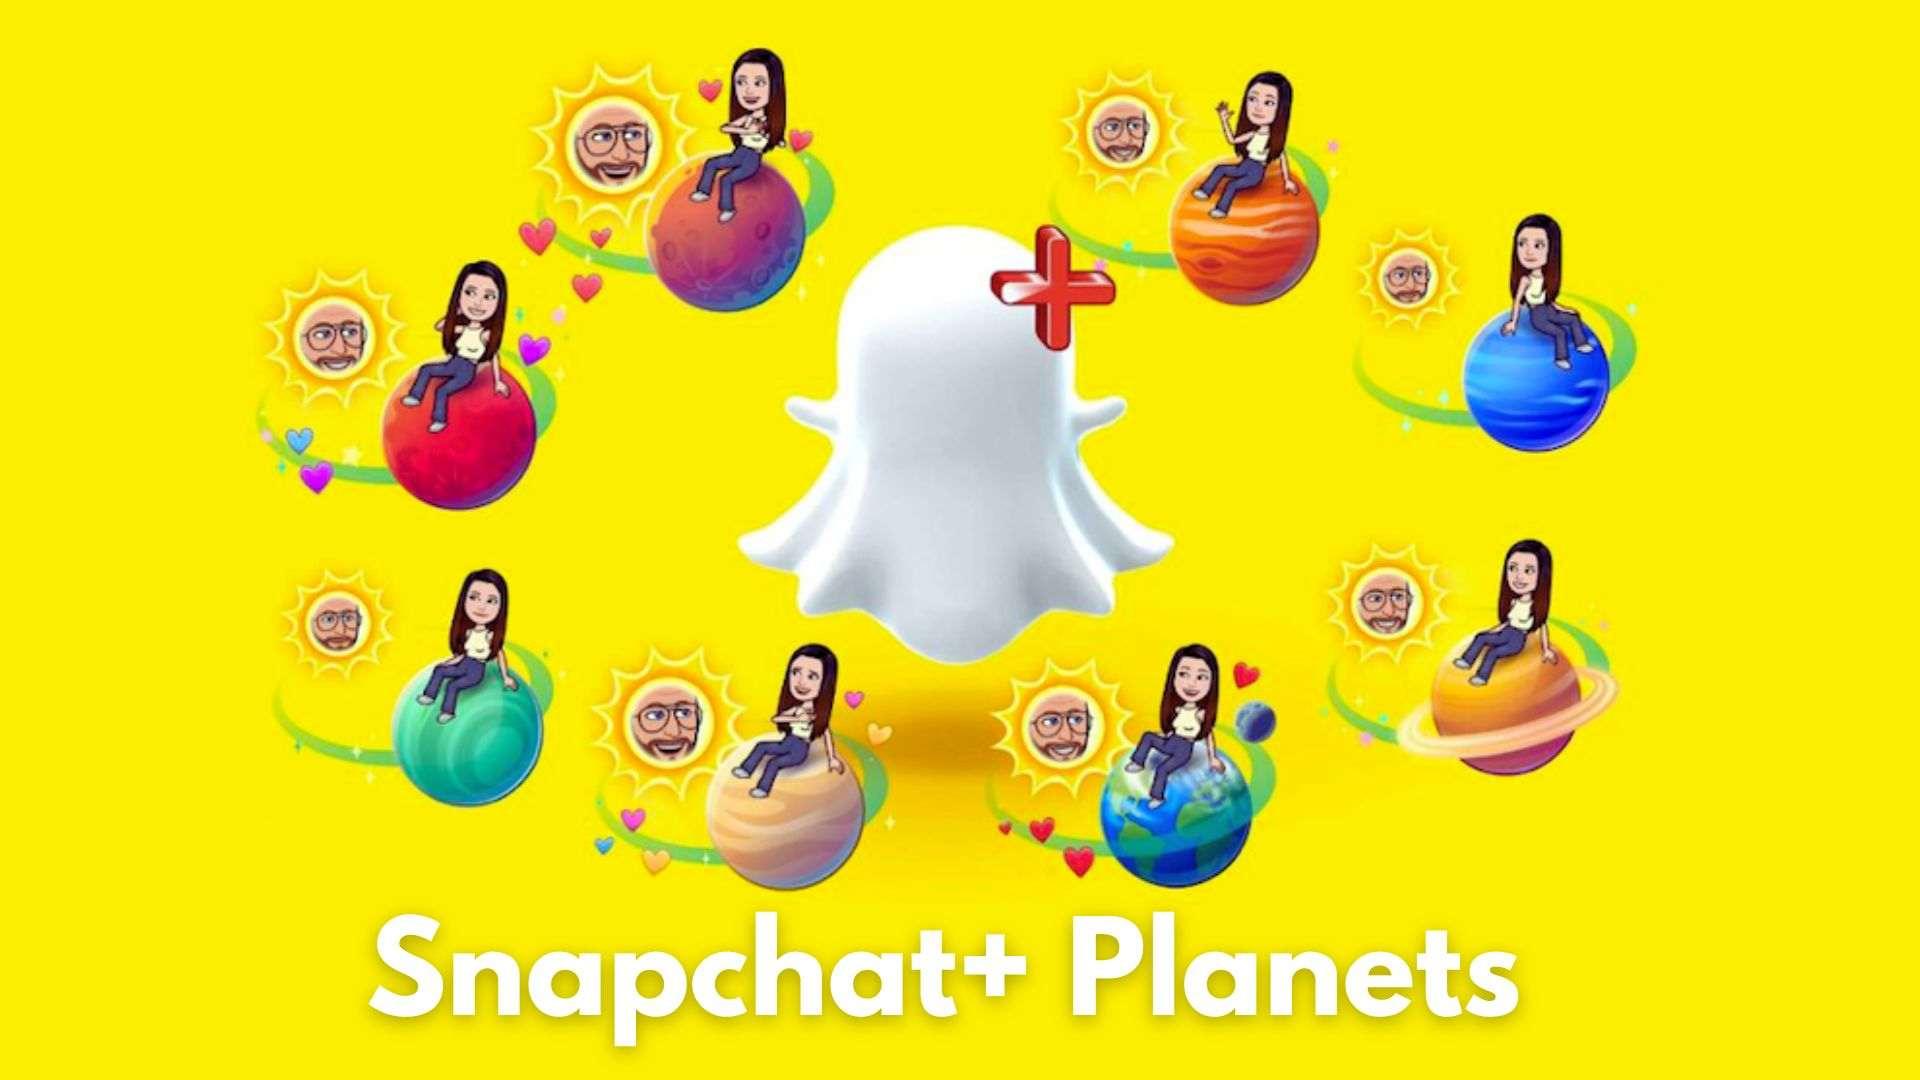 Snapchat Plus Planet Order